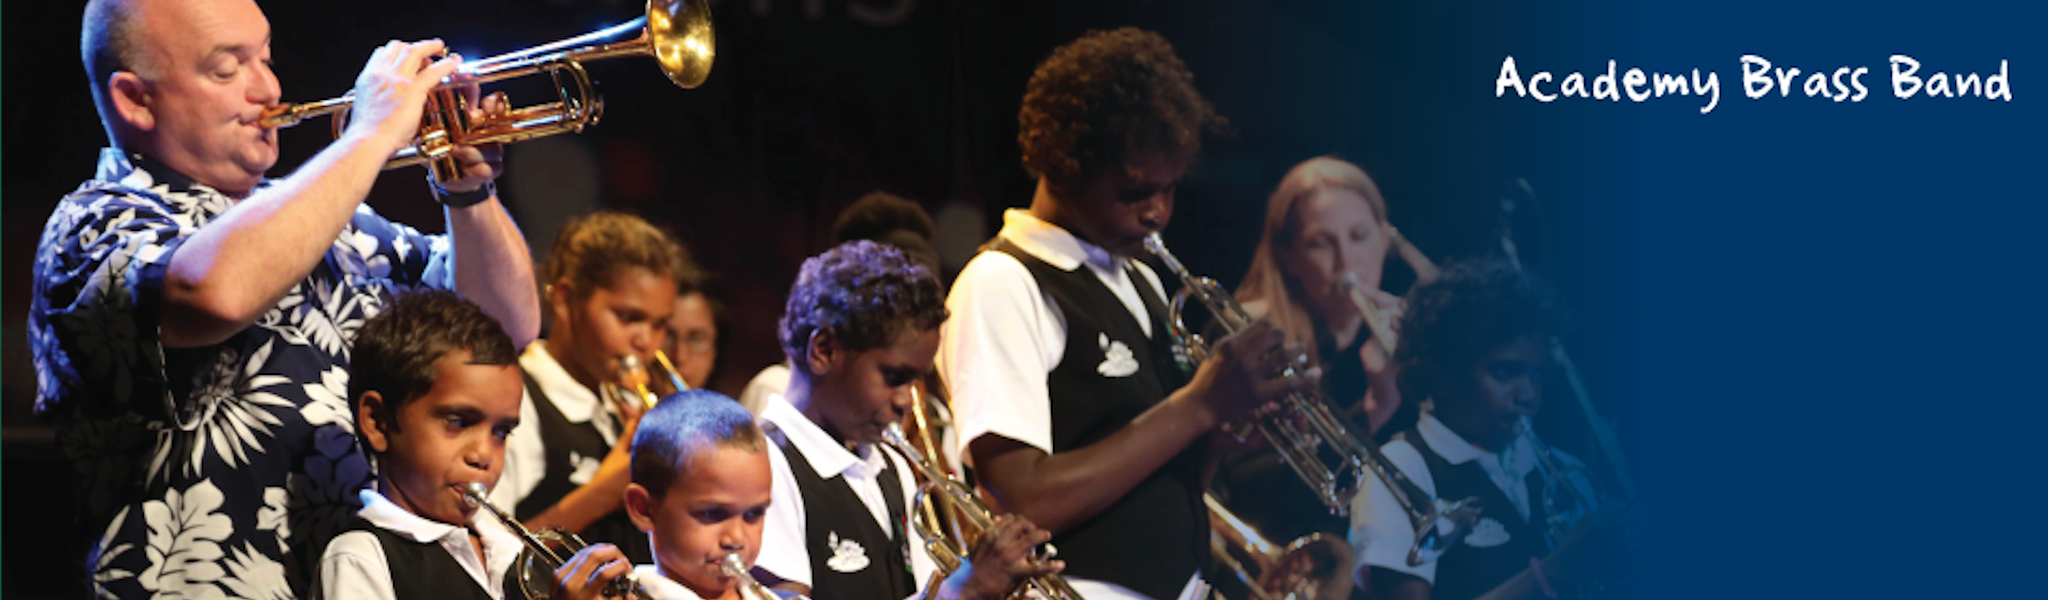 Academy Brass Band